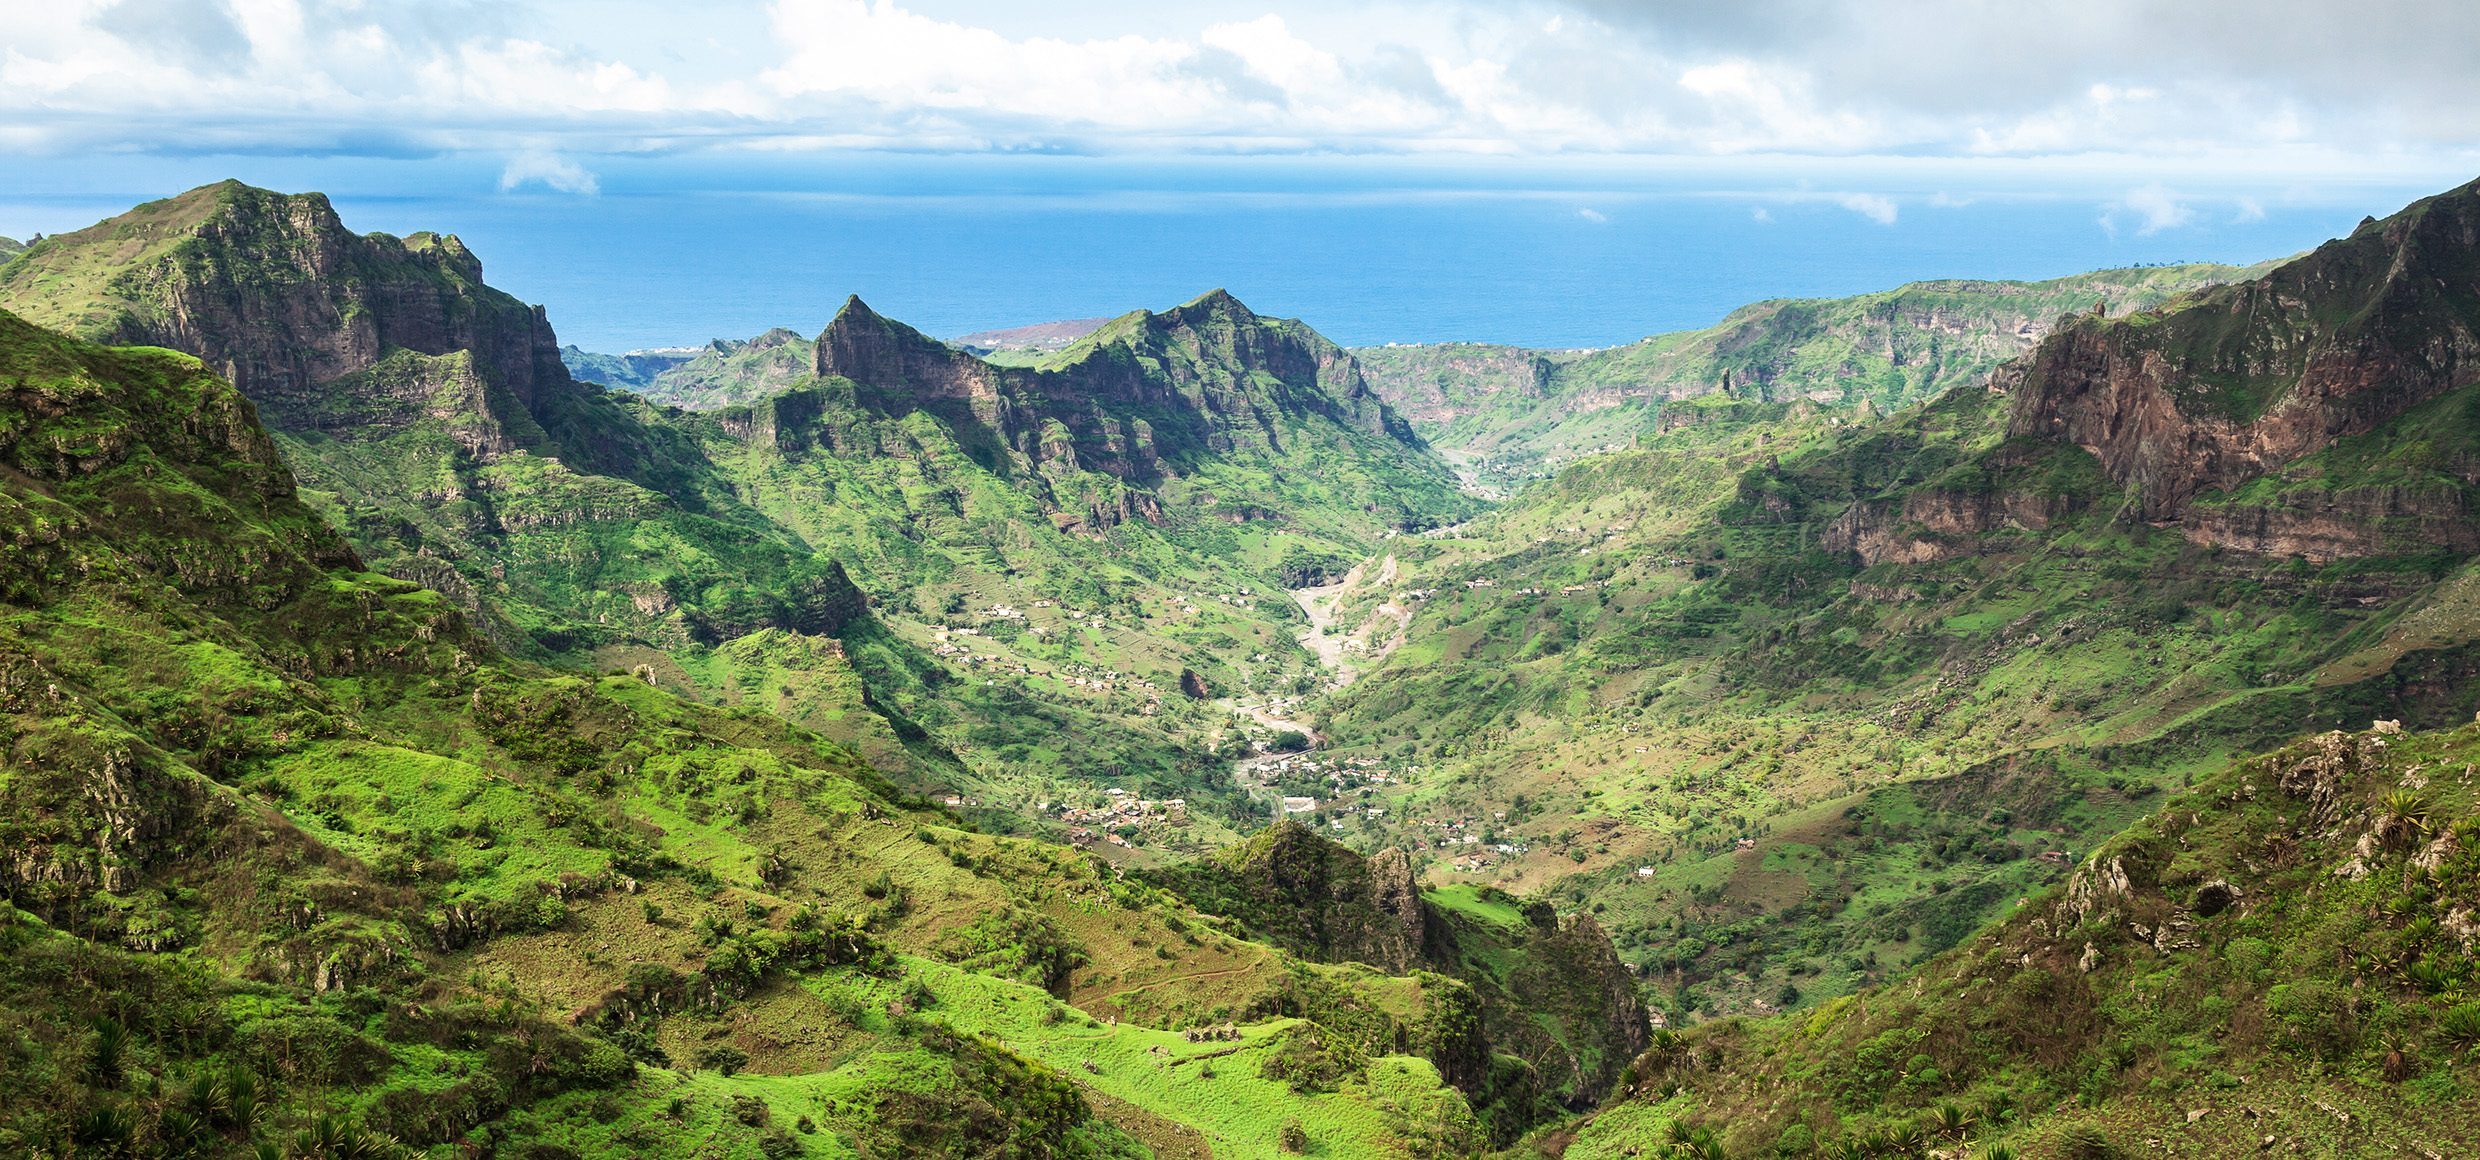 KapverdenSerra Malagueta mountains in Santiago Island - Cabo Verde